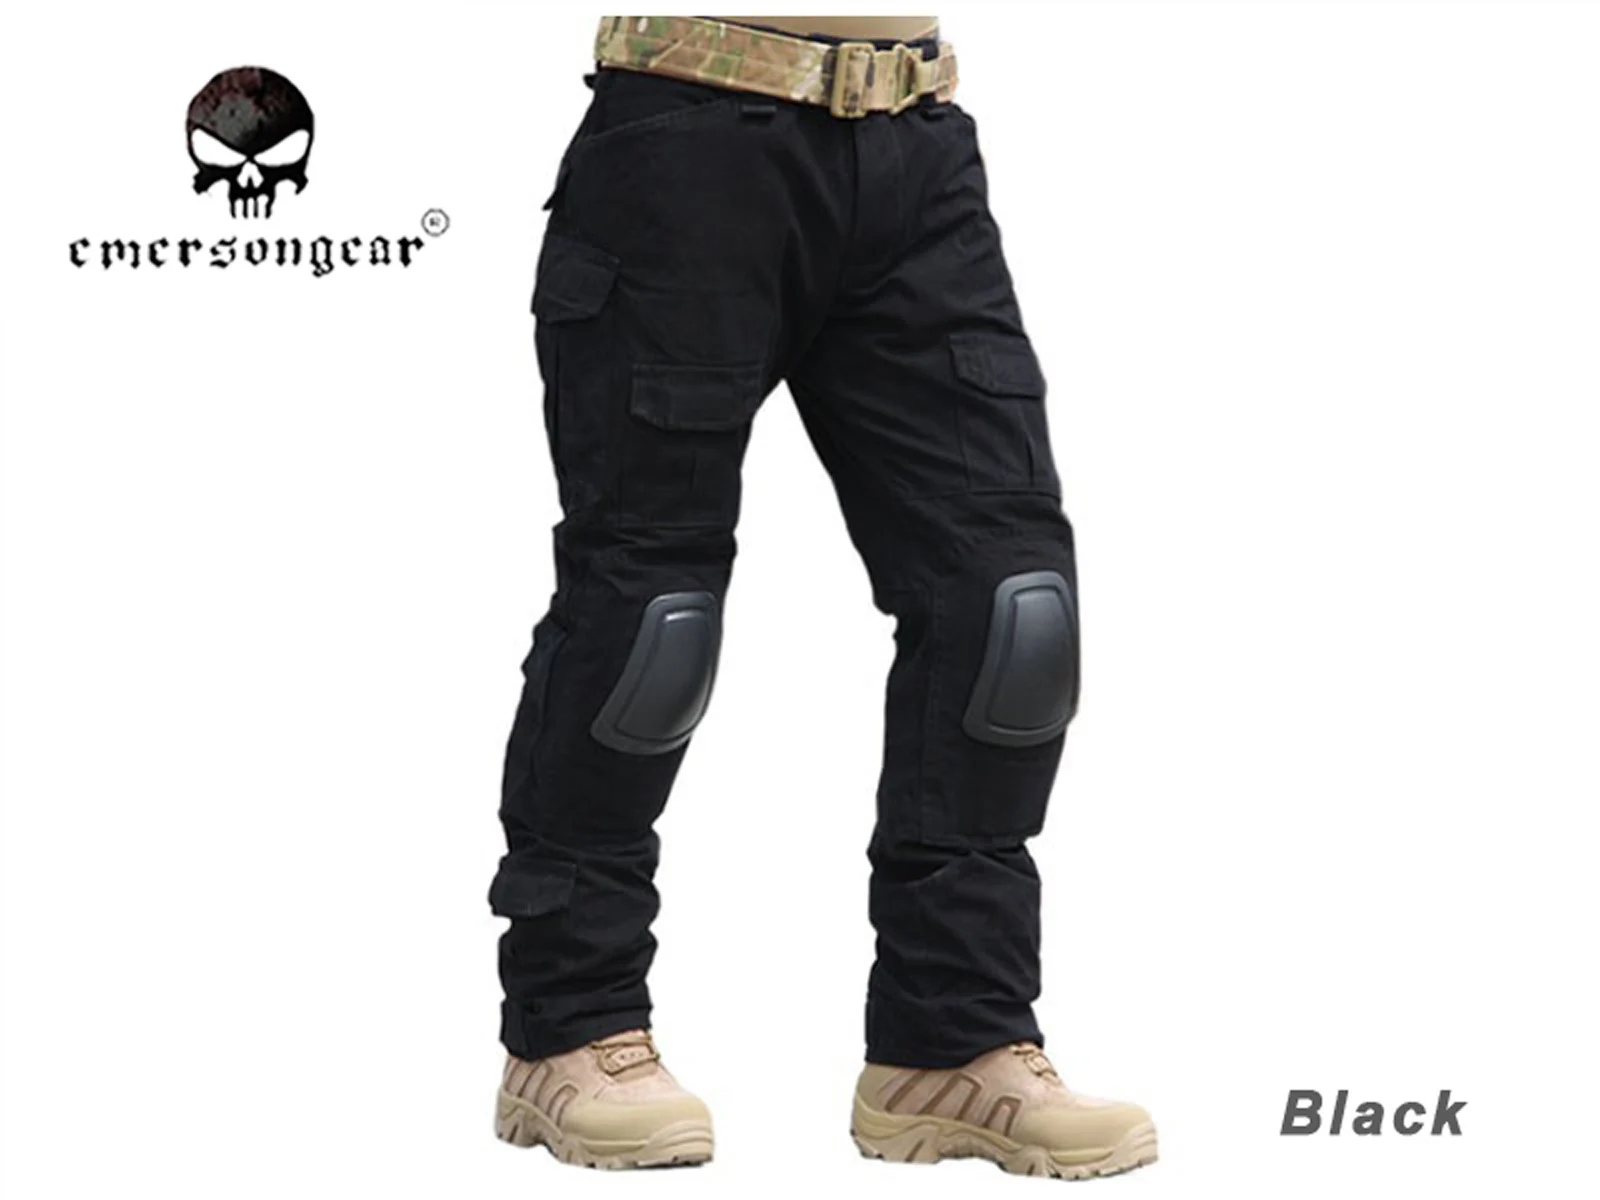 EMERSON Gen2 Tactical Pants Combat bdu Military with Knee Pads Black EM6988